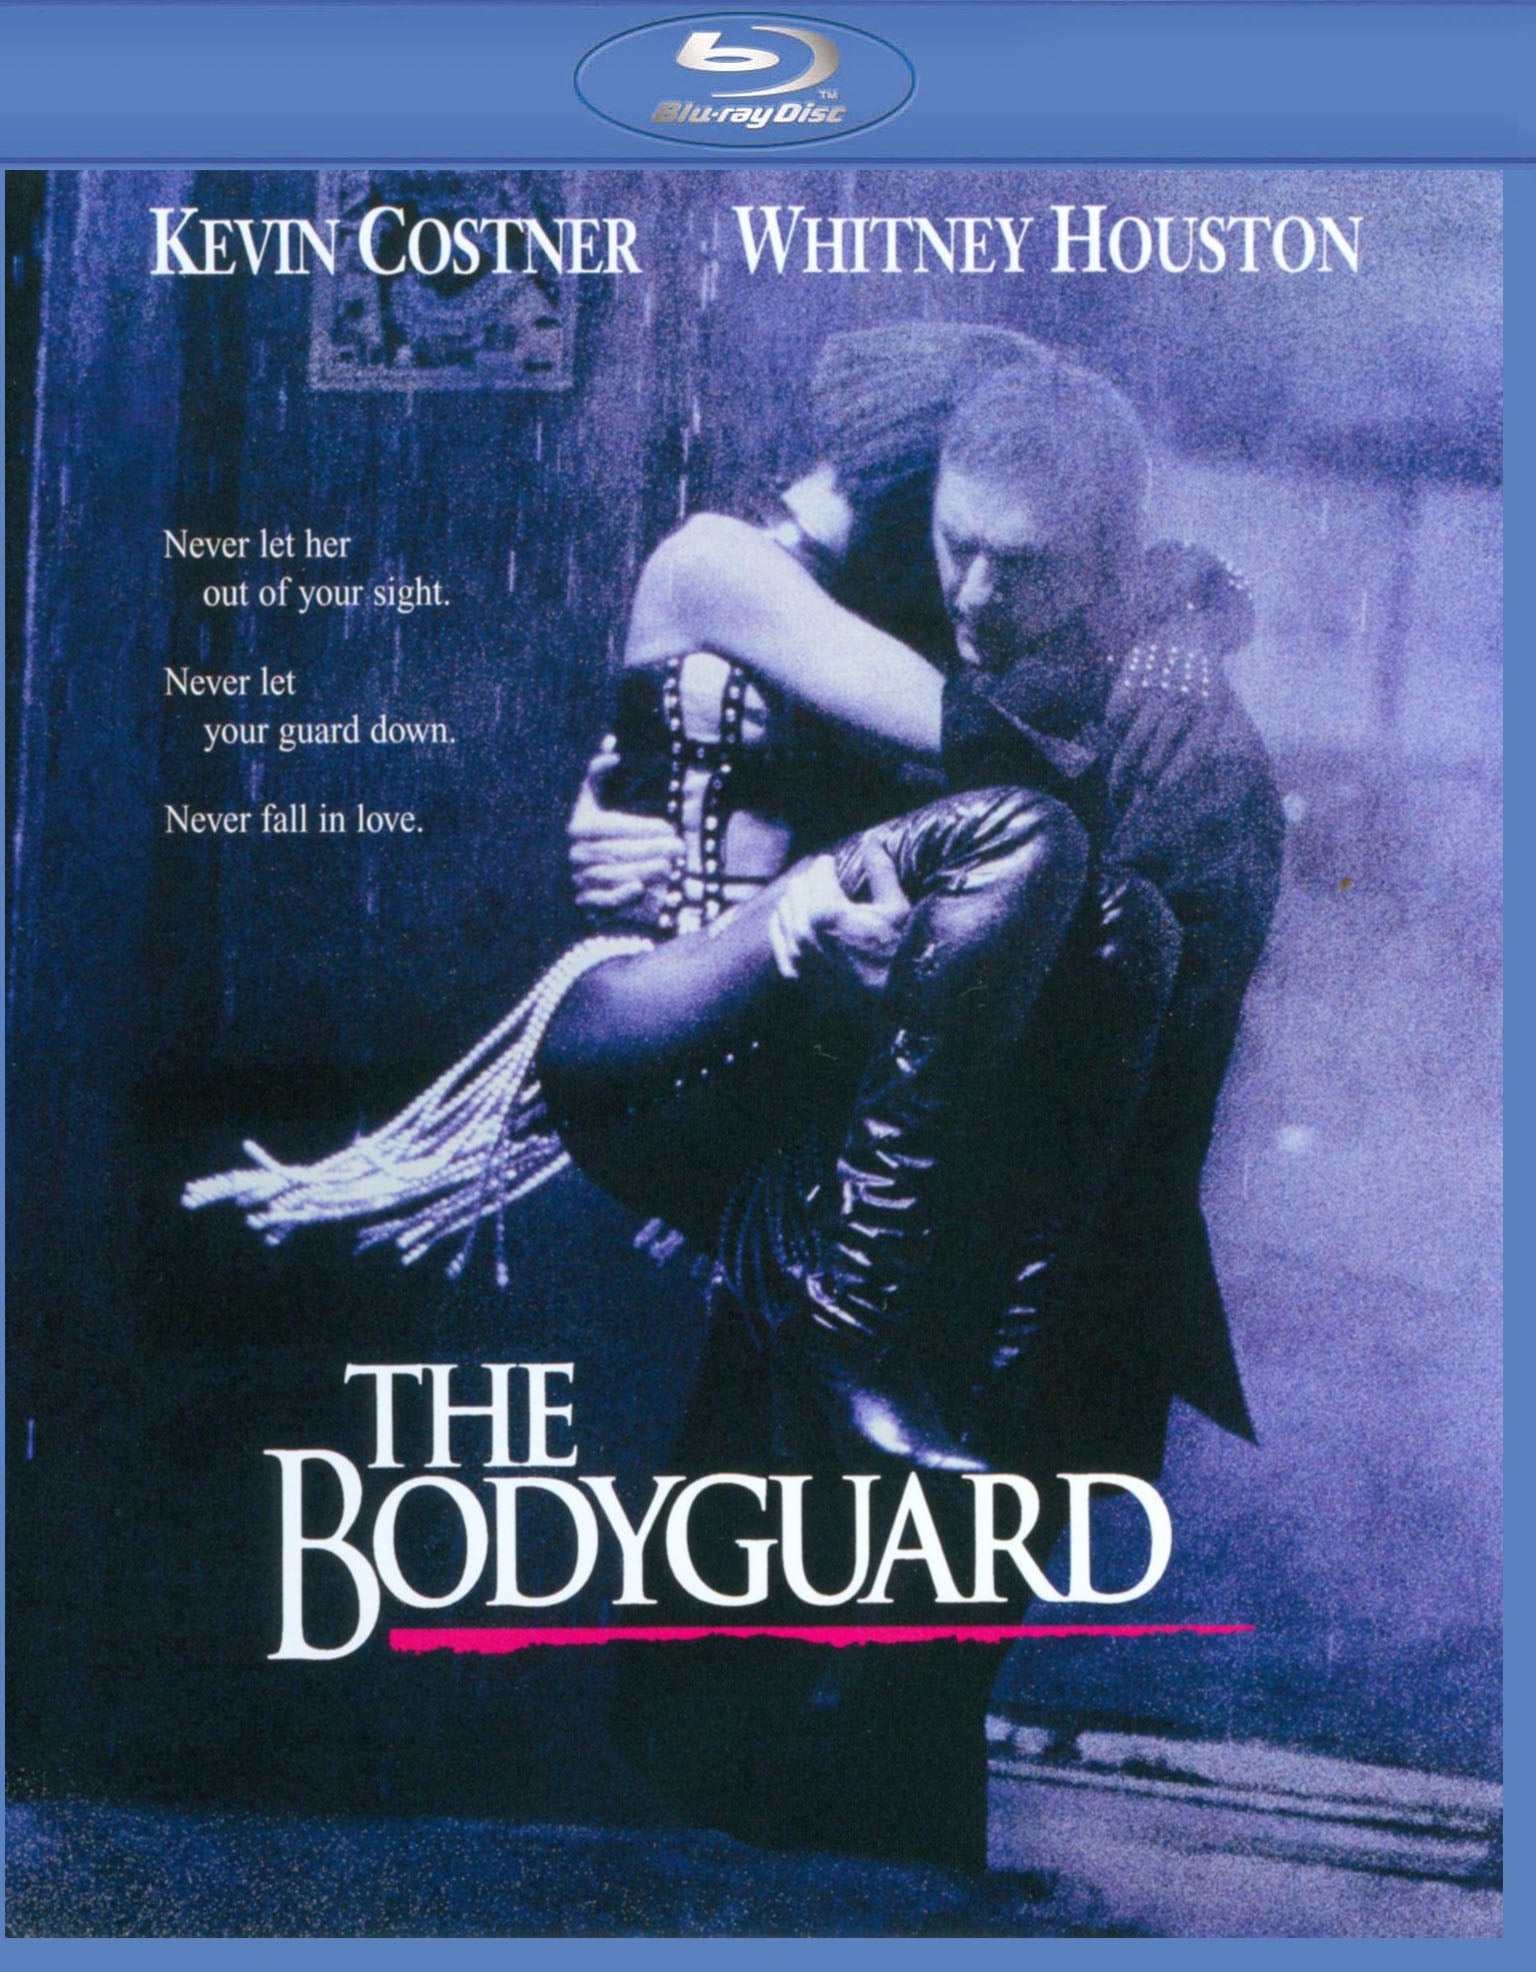 Bodyguard [Blu-ray] cover art